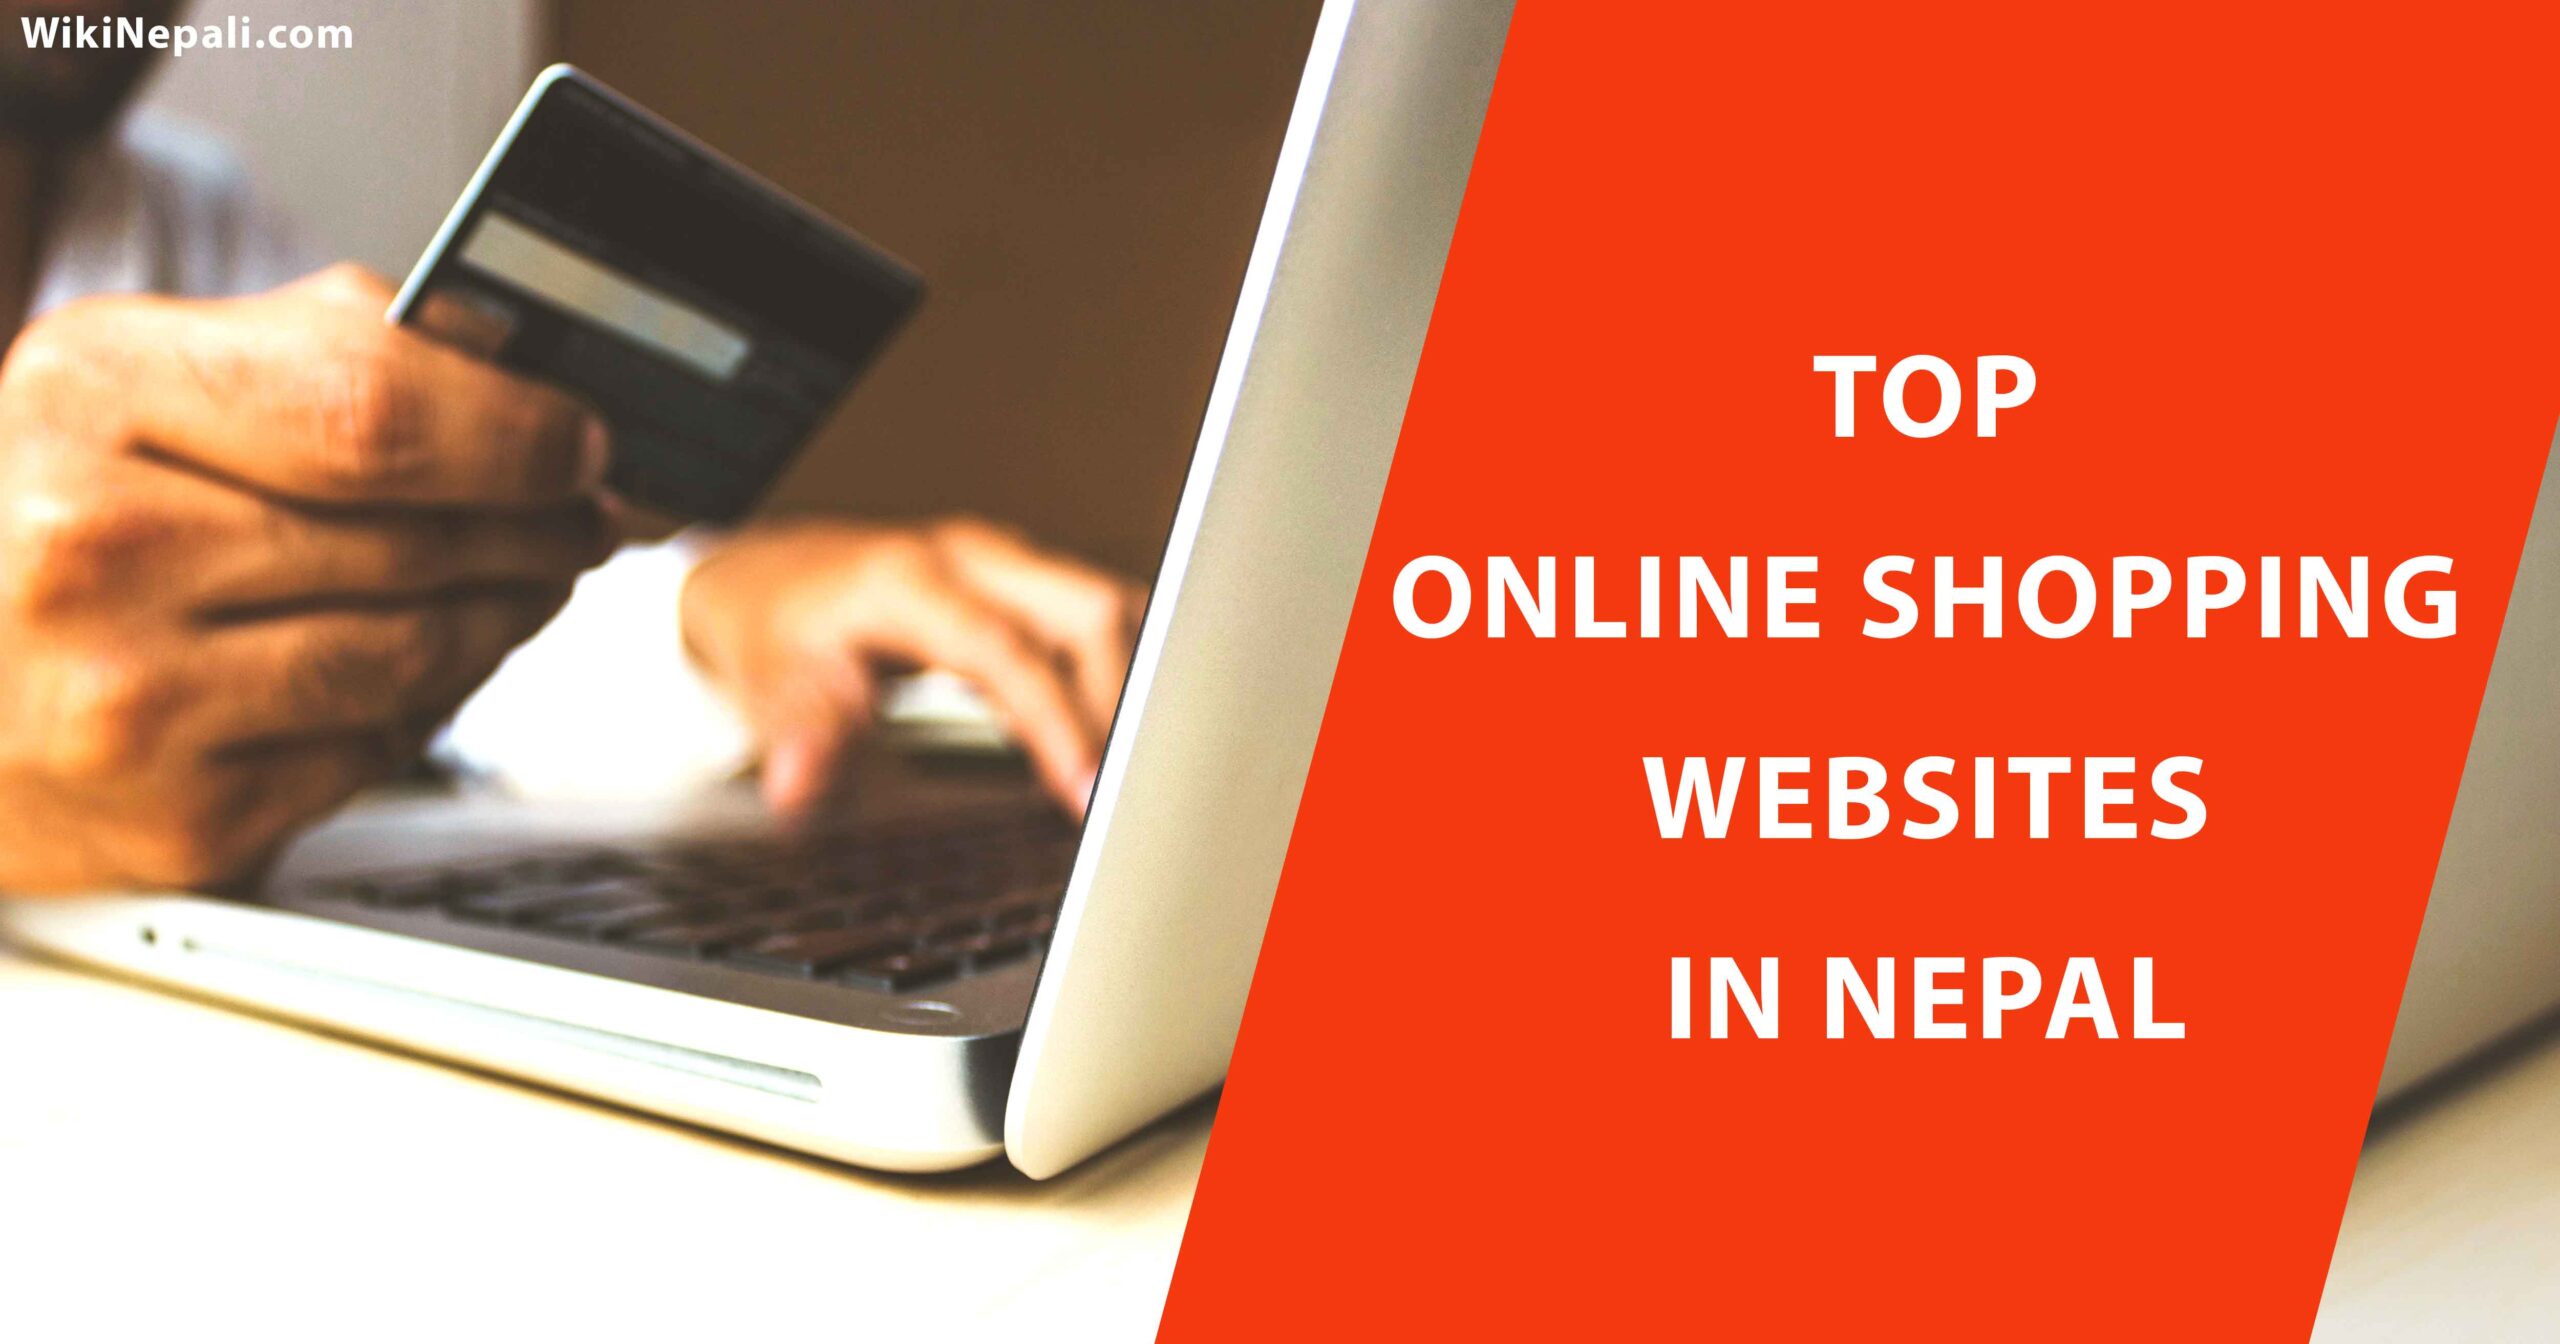 Online Shopping Websites in Nepal